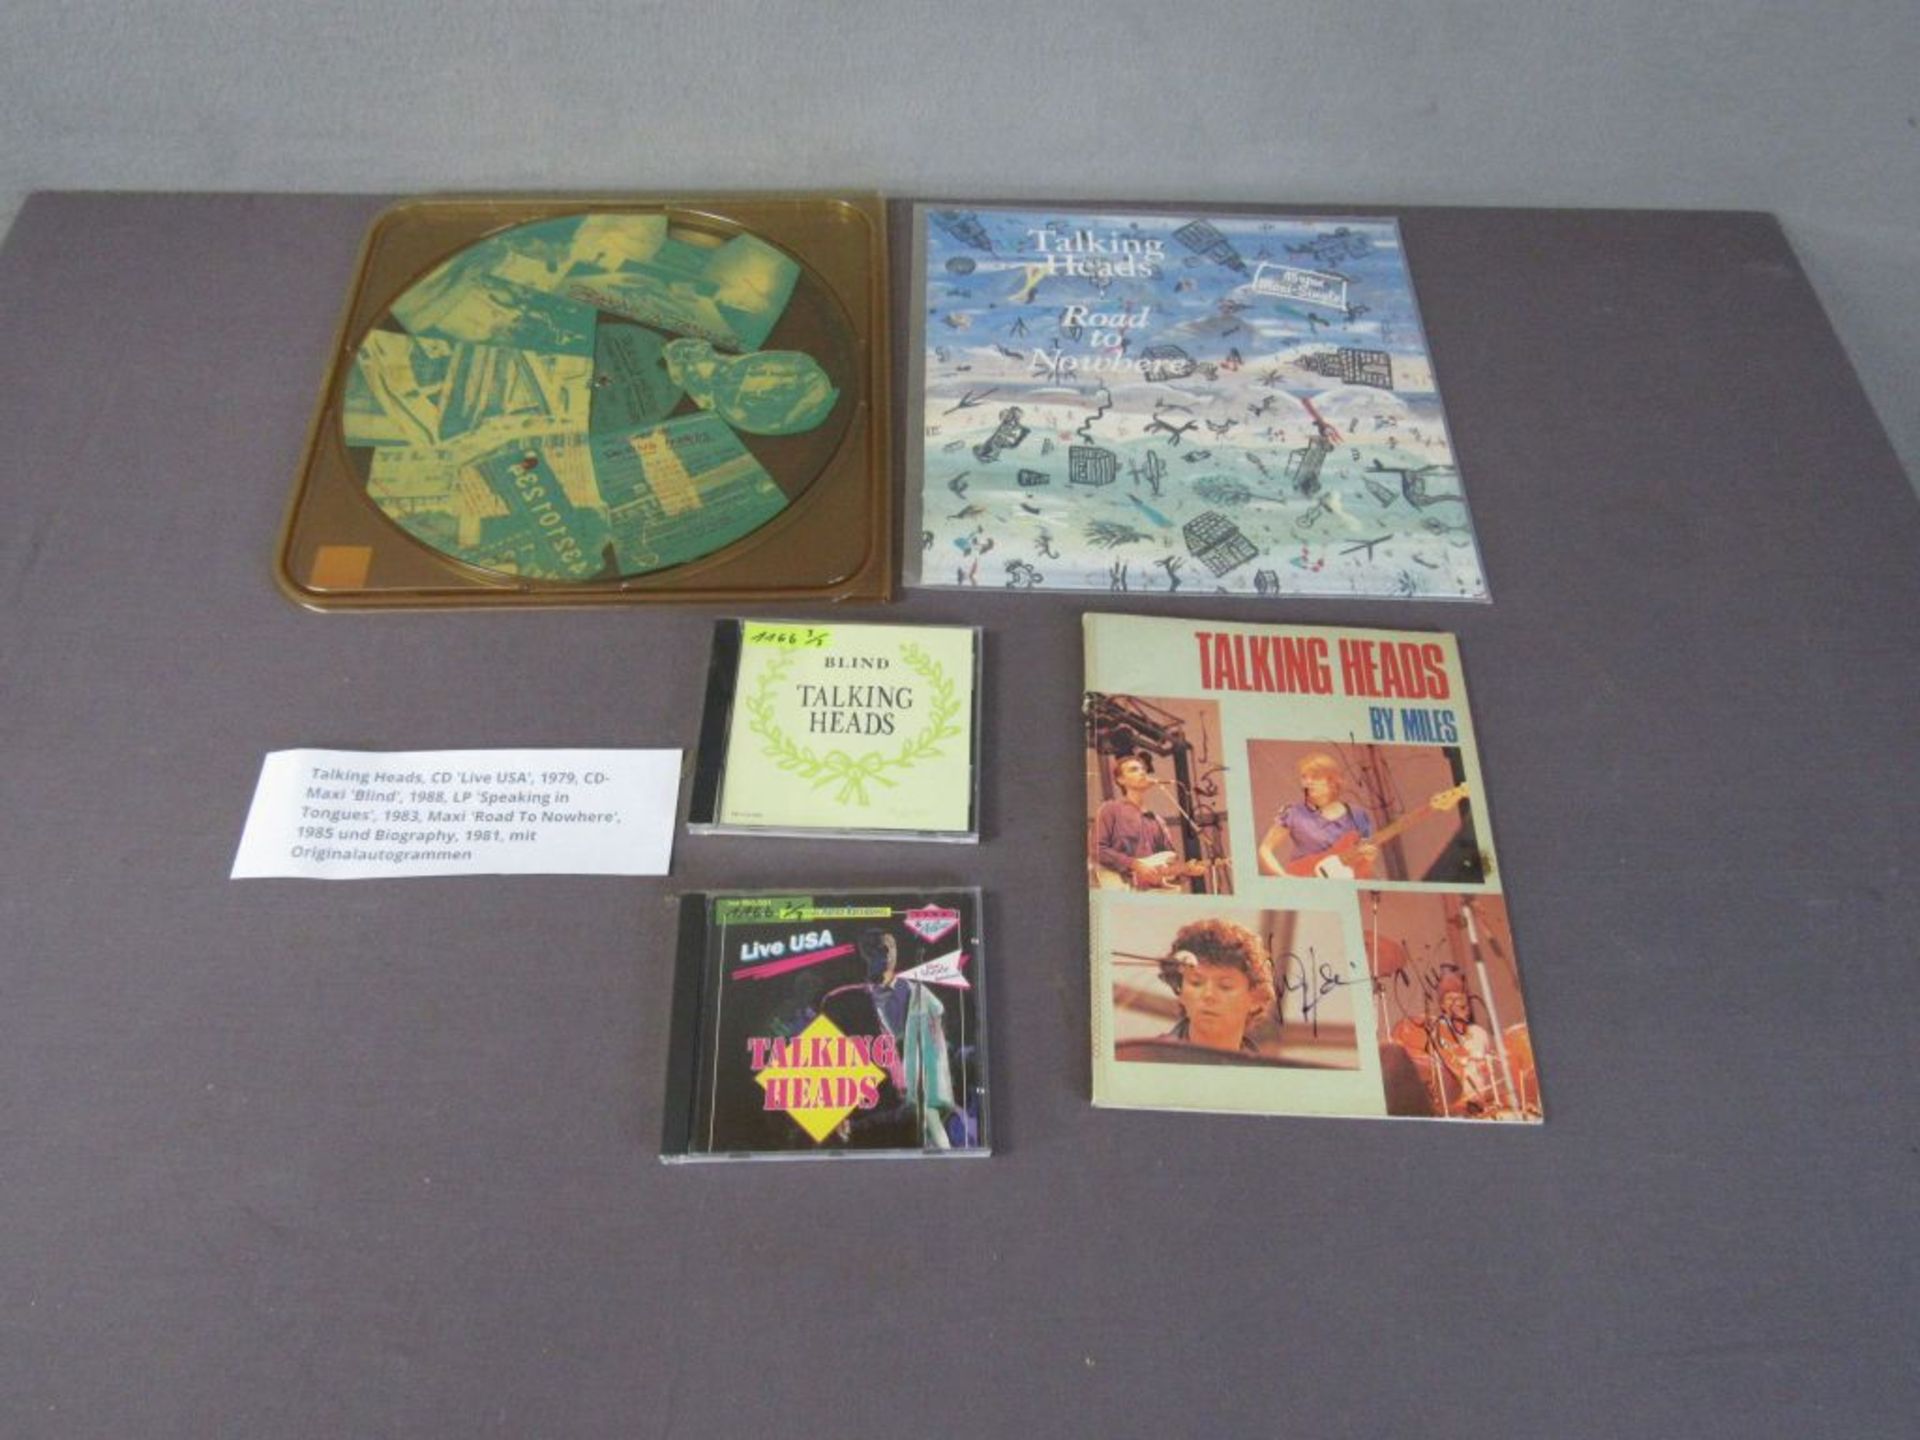 Talking Heads CD Live USA 1979 CD Maxi